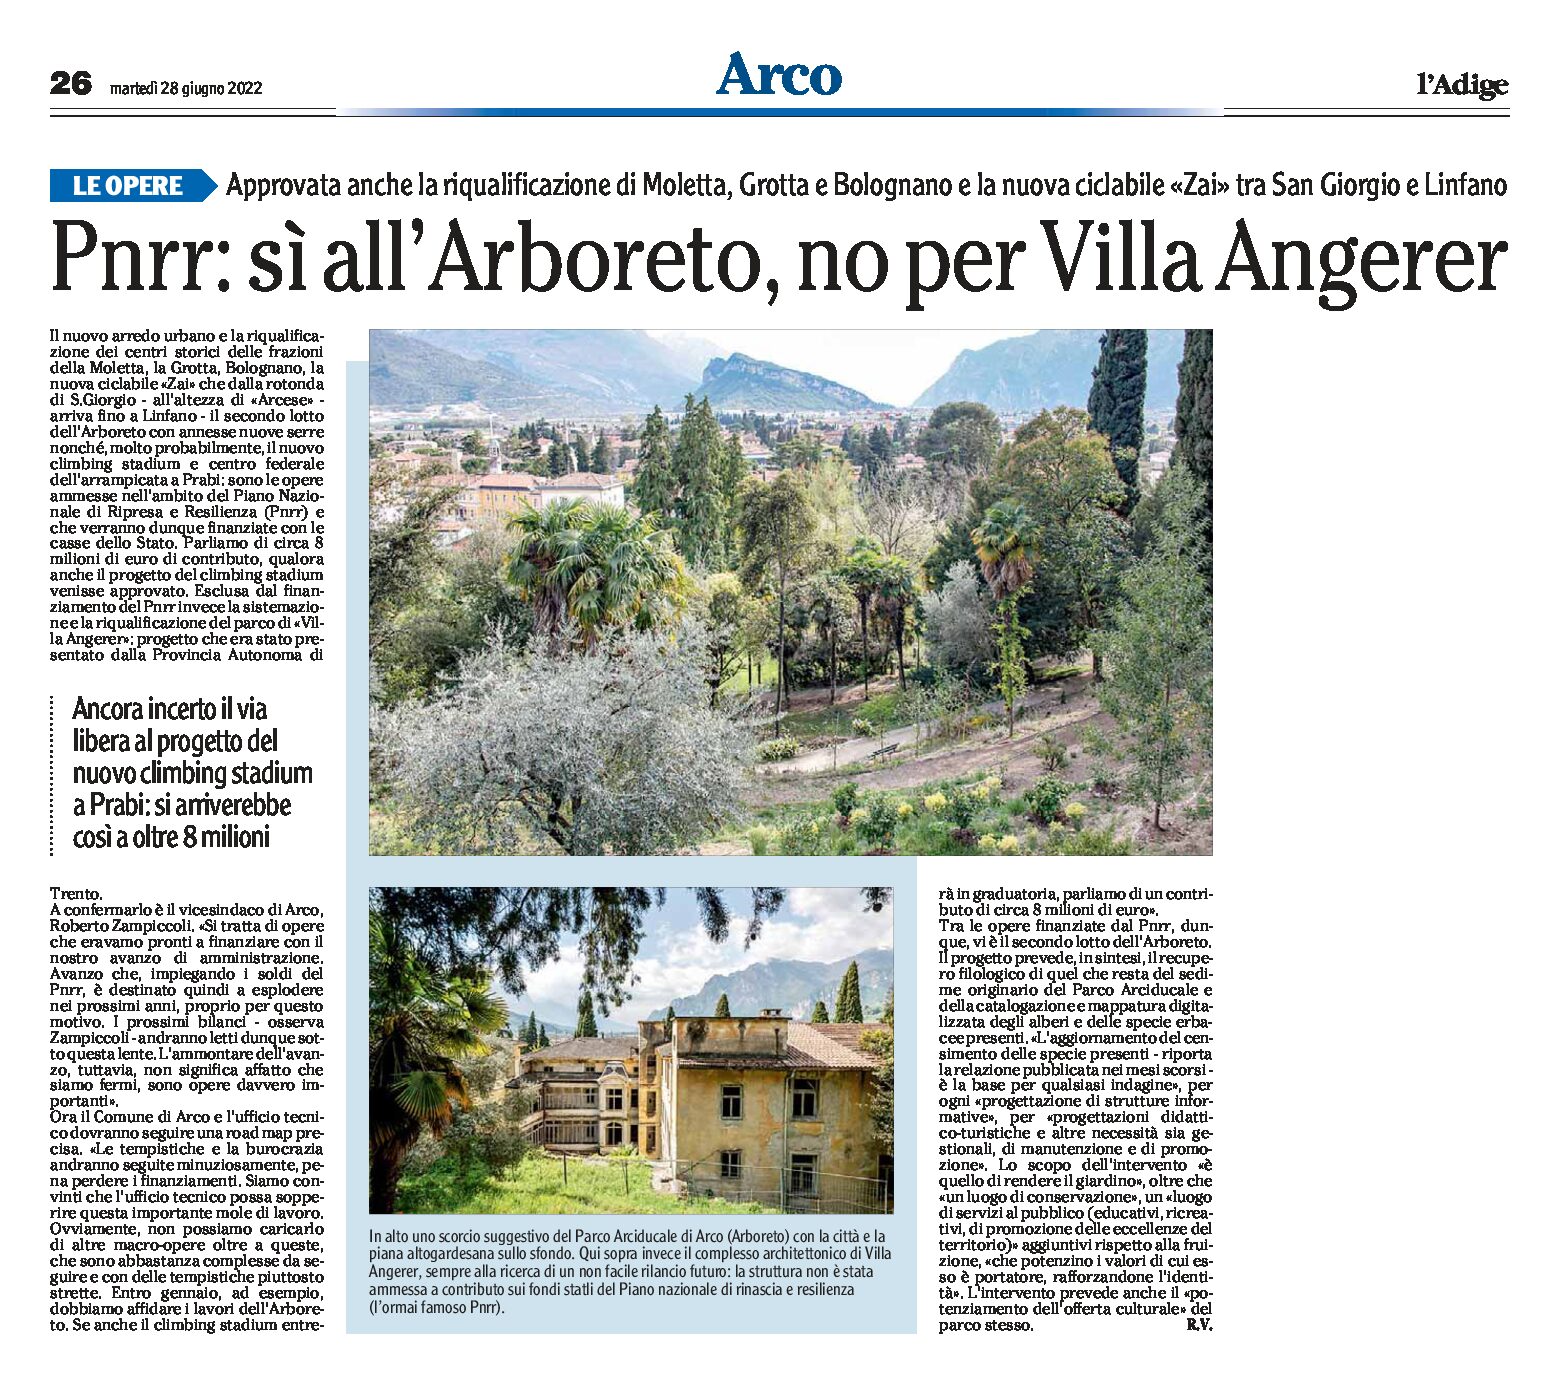 Arco, Pnrr: sì all’Arboreto, no per Villa Angerer